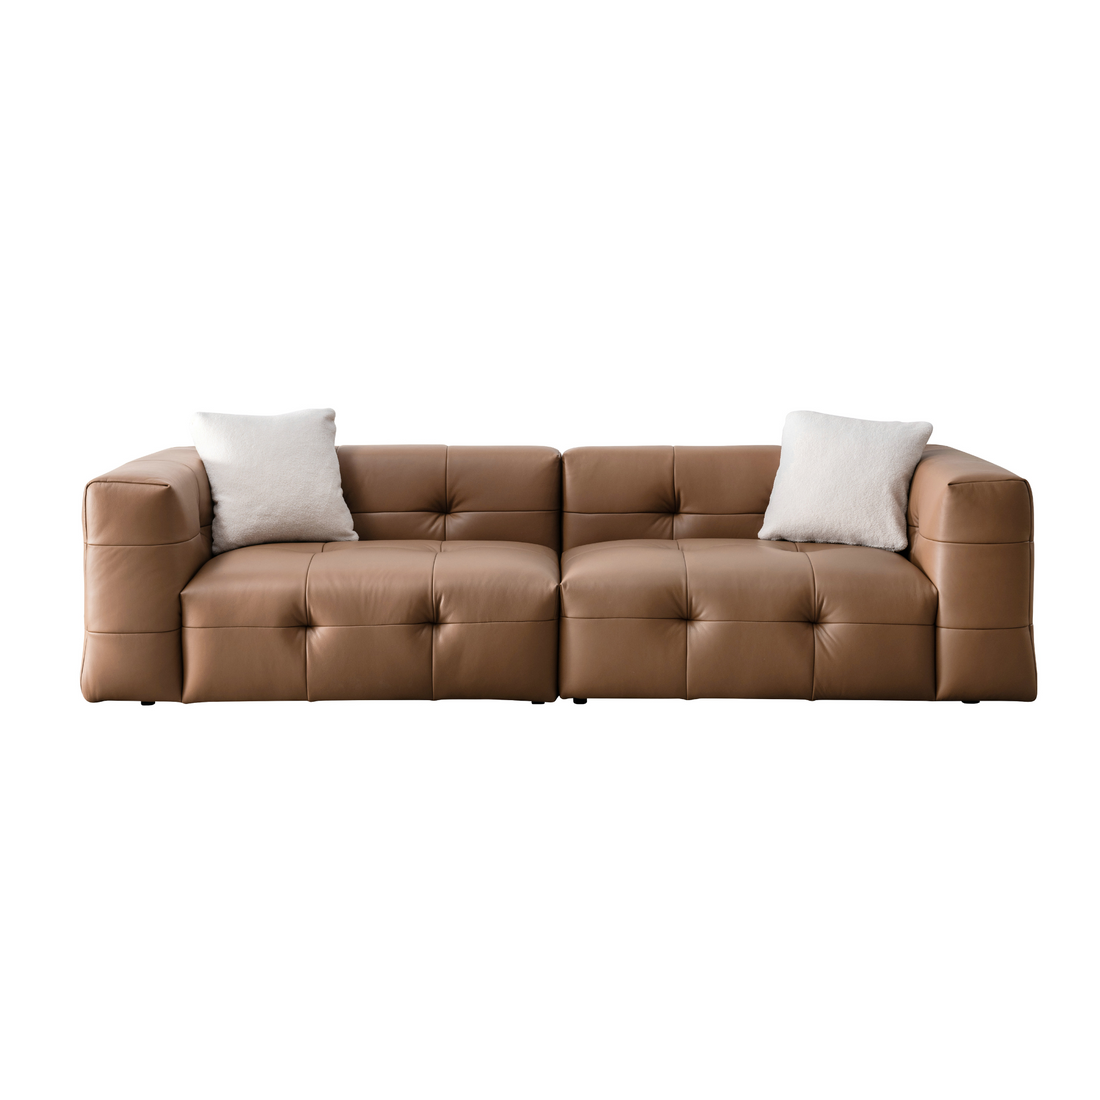 Marshy leather 4 seater sofa (268cm)